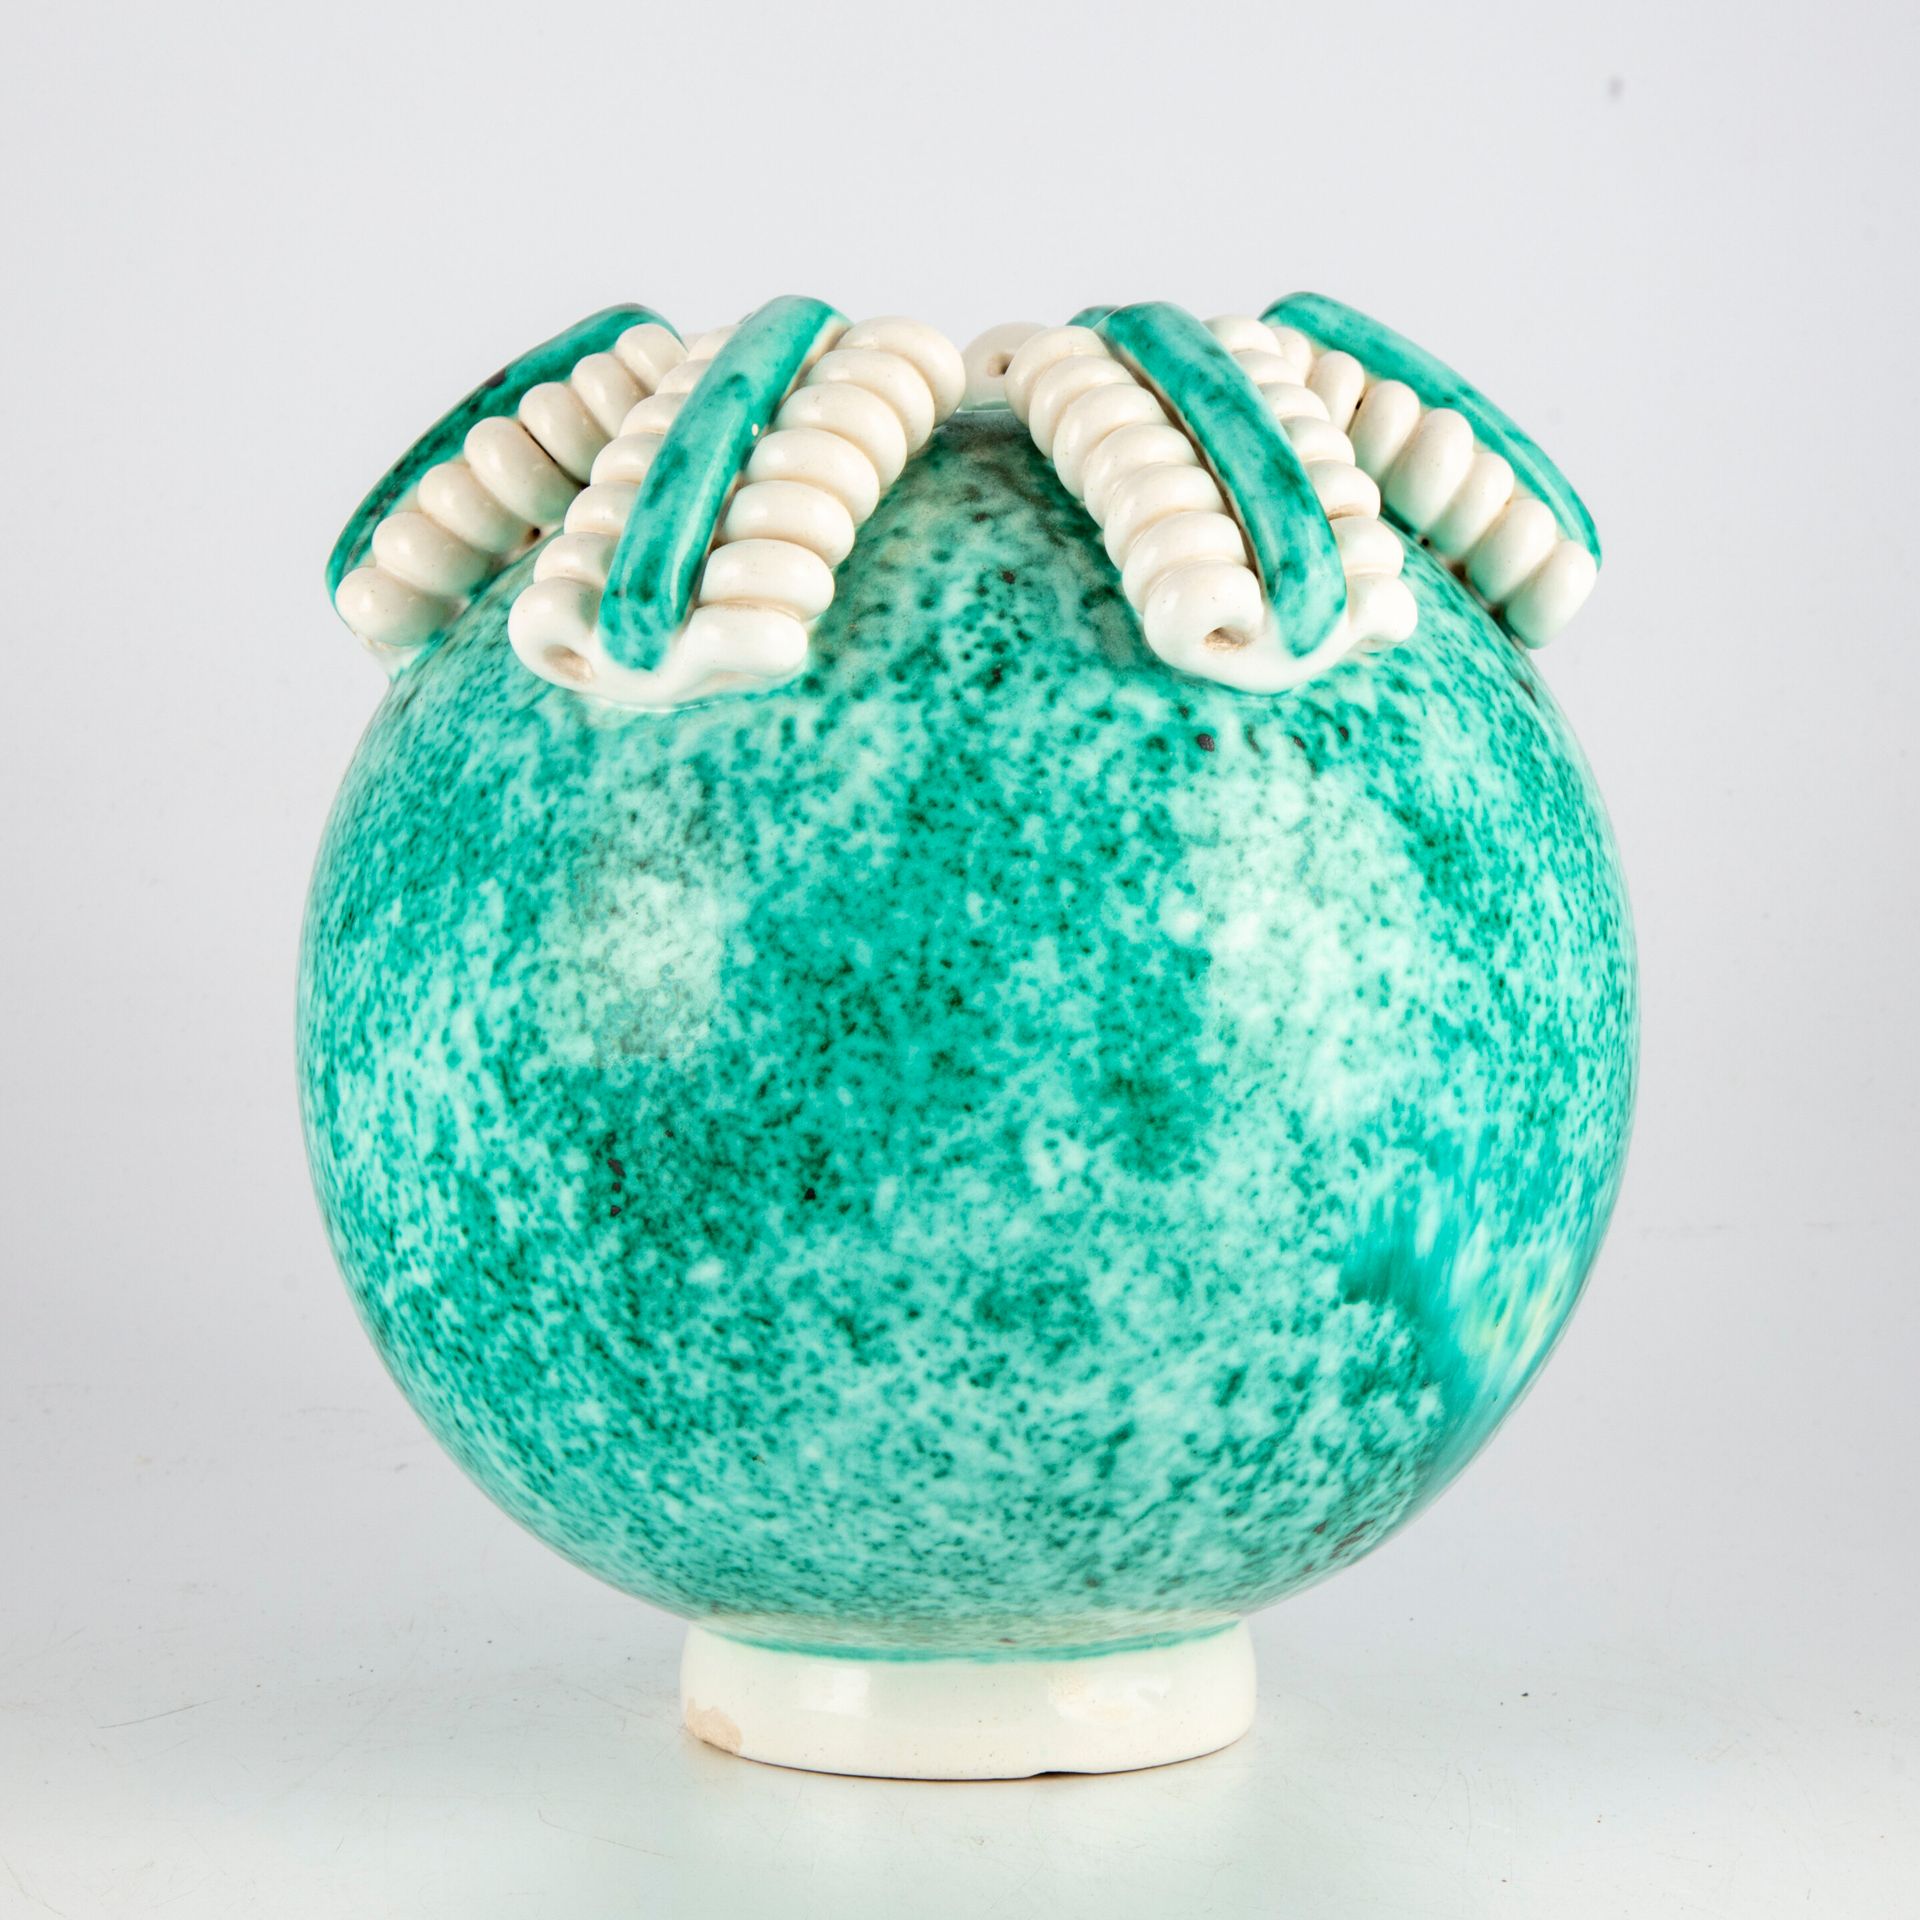 SAINTE RADEGONDE SAINTE RADEGONDE 

Vase boule en céramique vernissée vert émera&hellip;